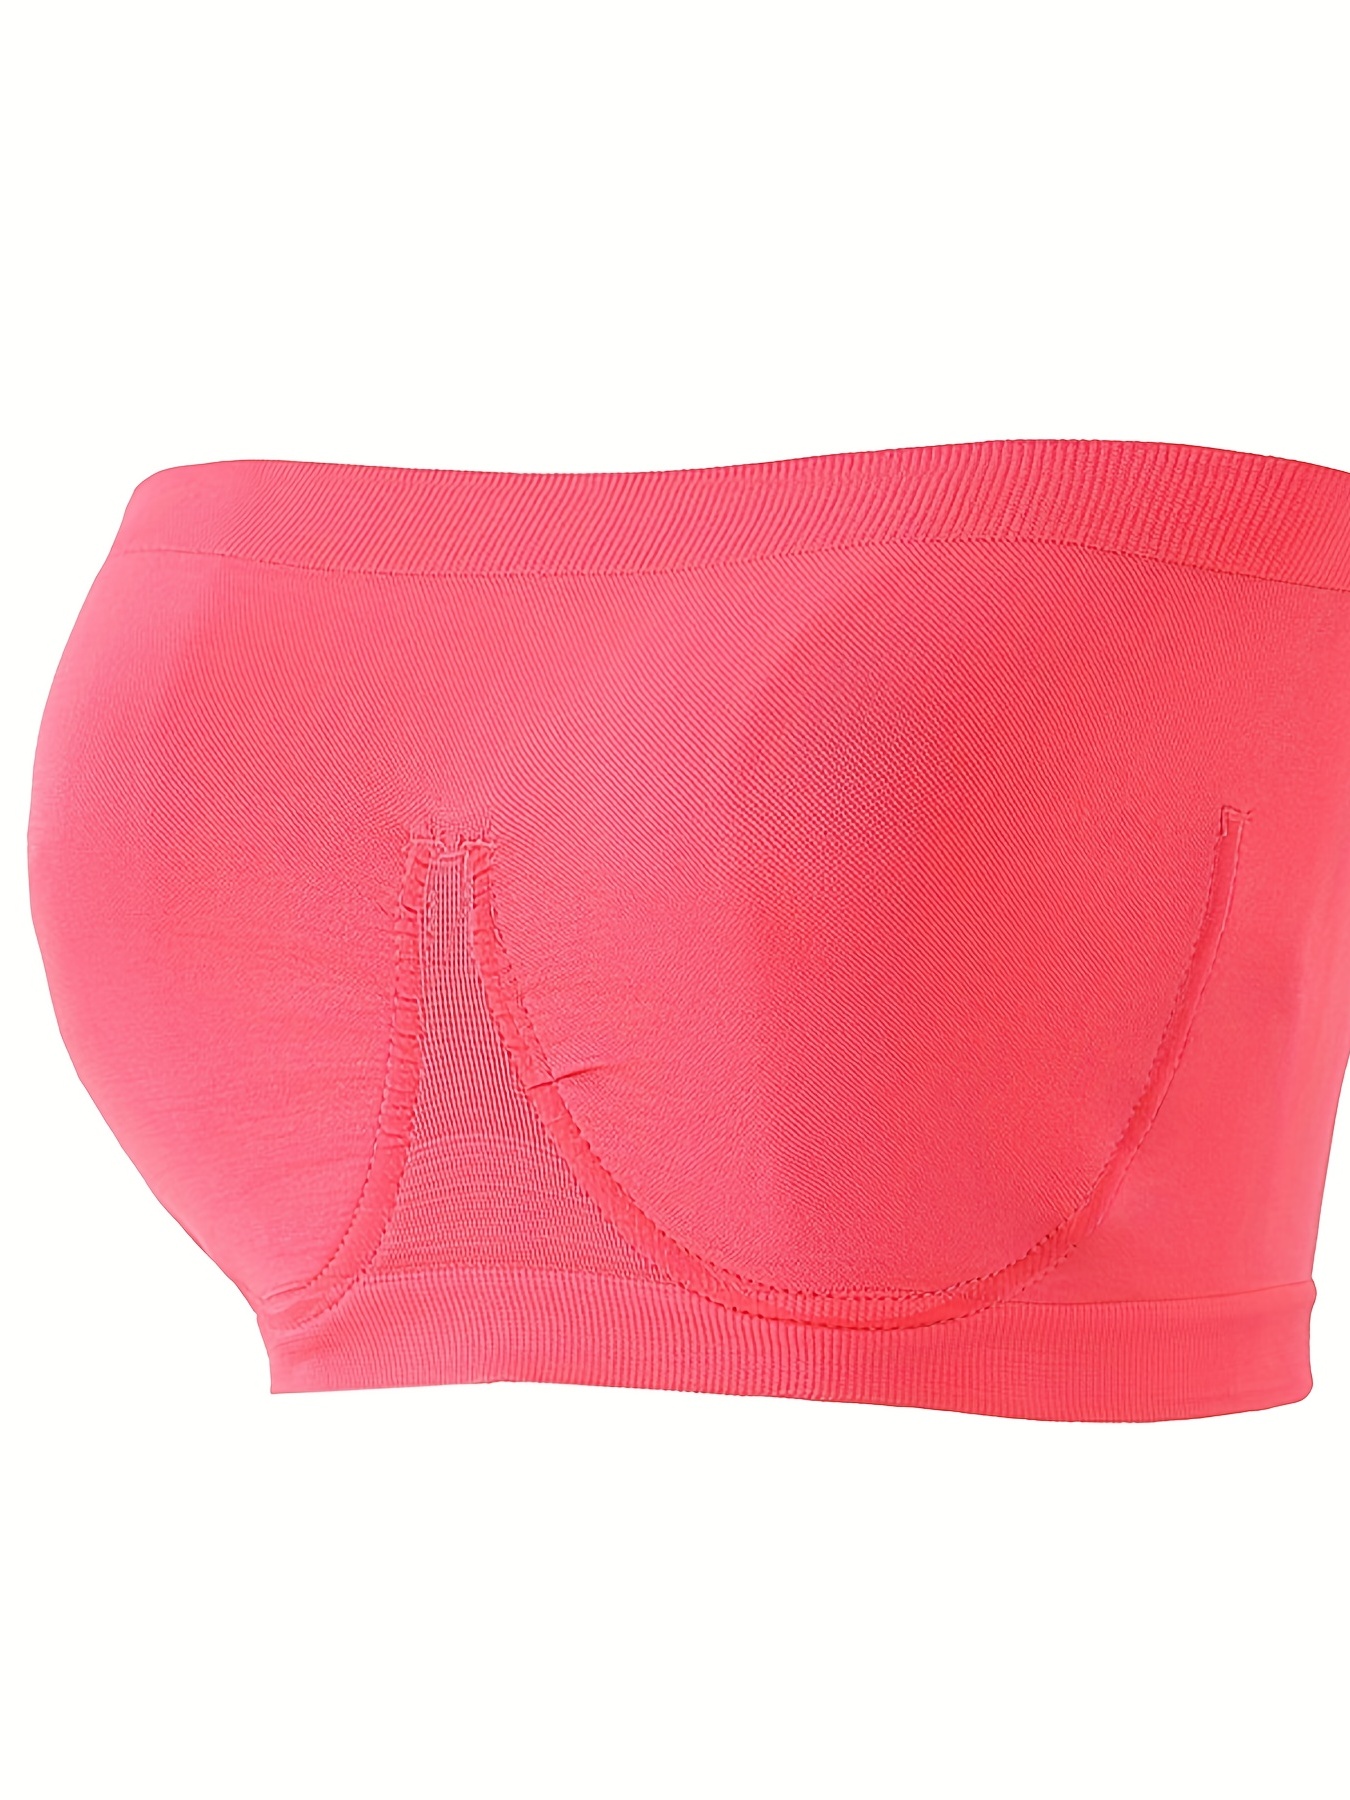  Womens Strapless Bra Silicone-Free Minimizer Bandeau Plus  Size Unlined Pink Gazelle Heather 32DD